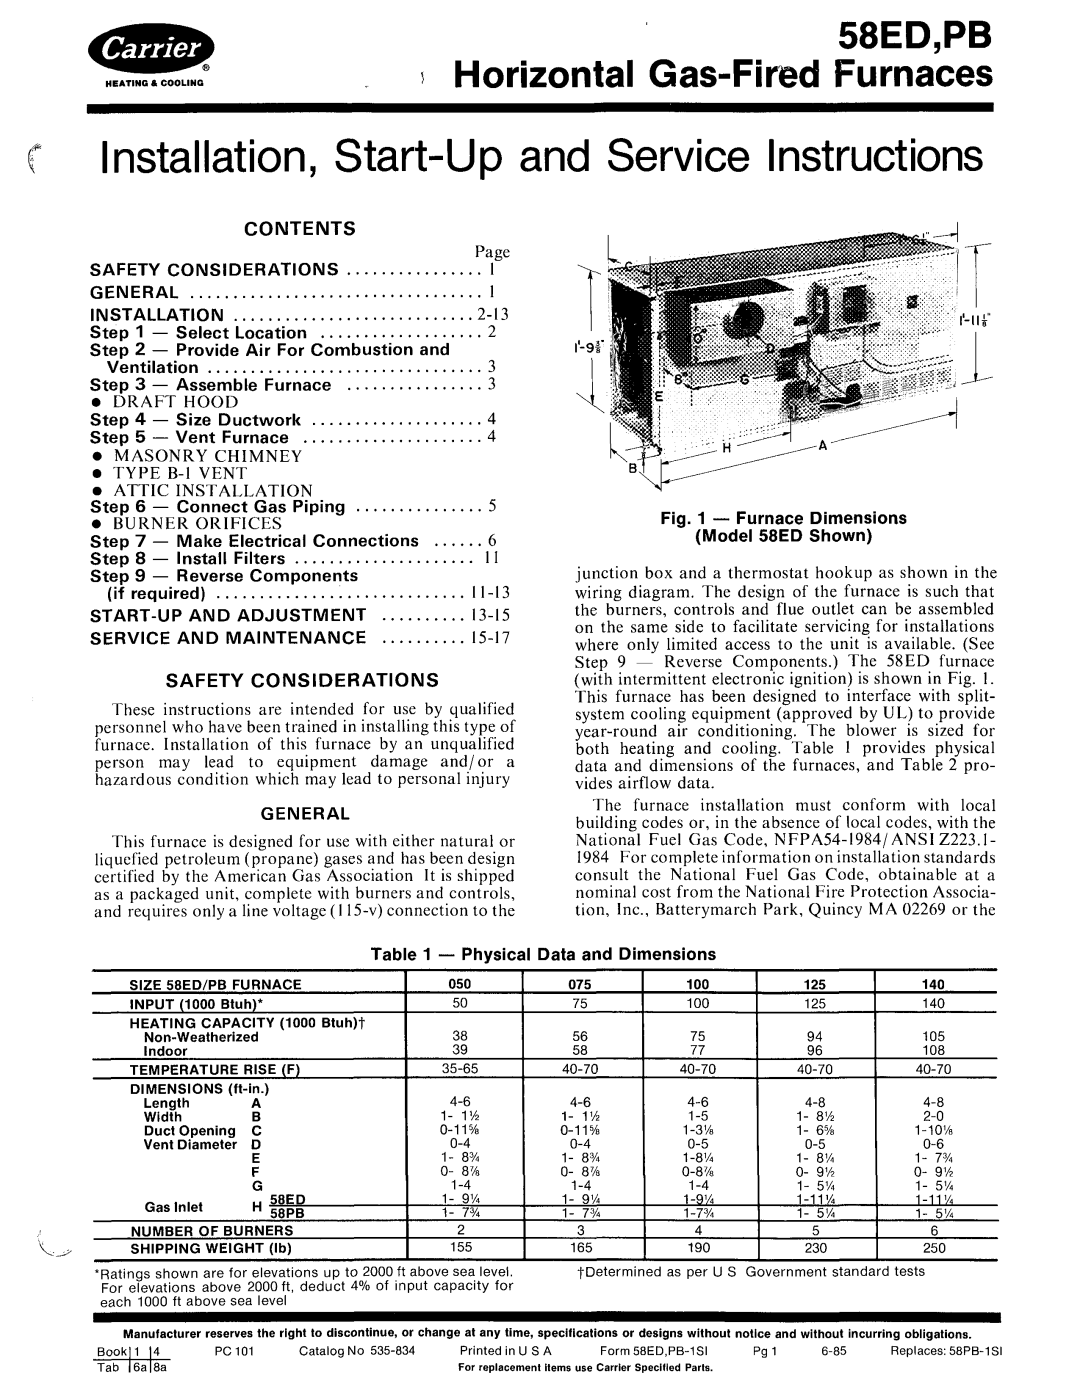 Carrier 58ED, PB manual 